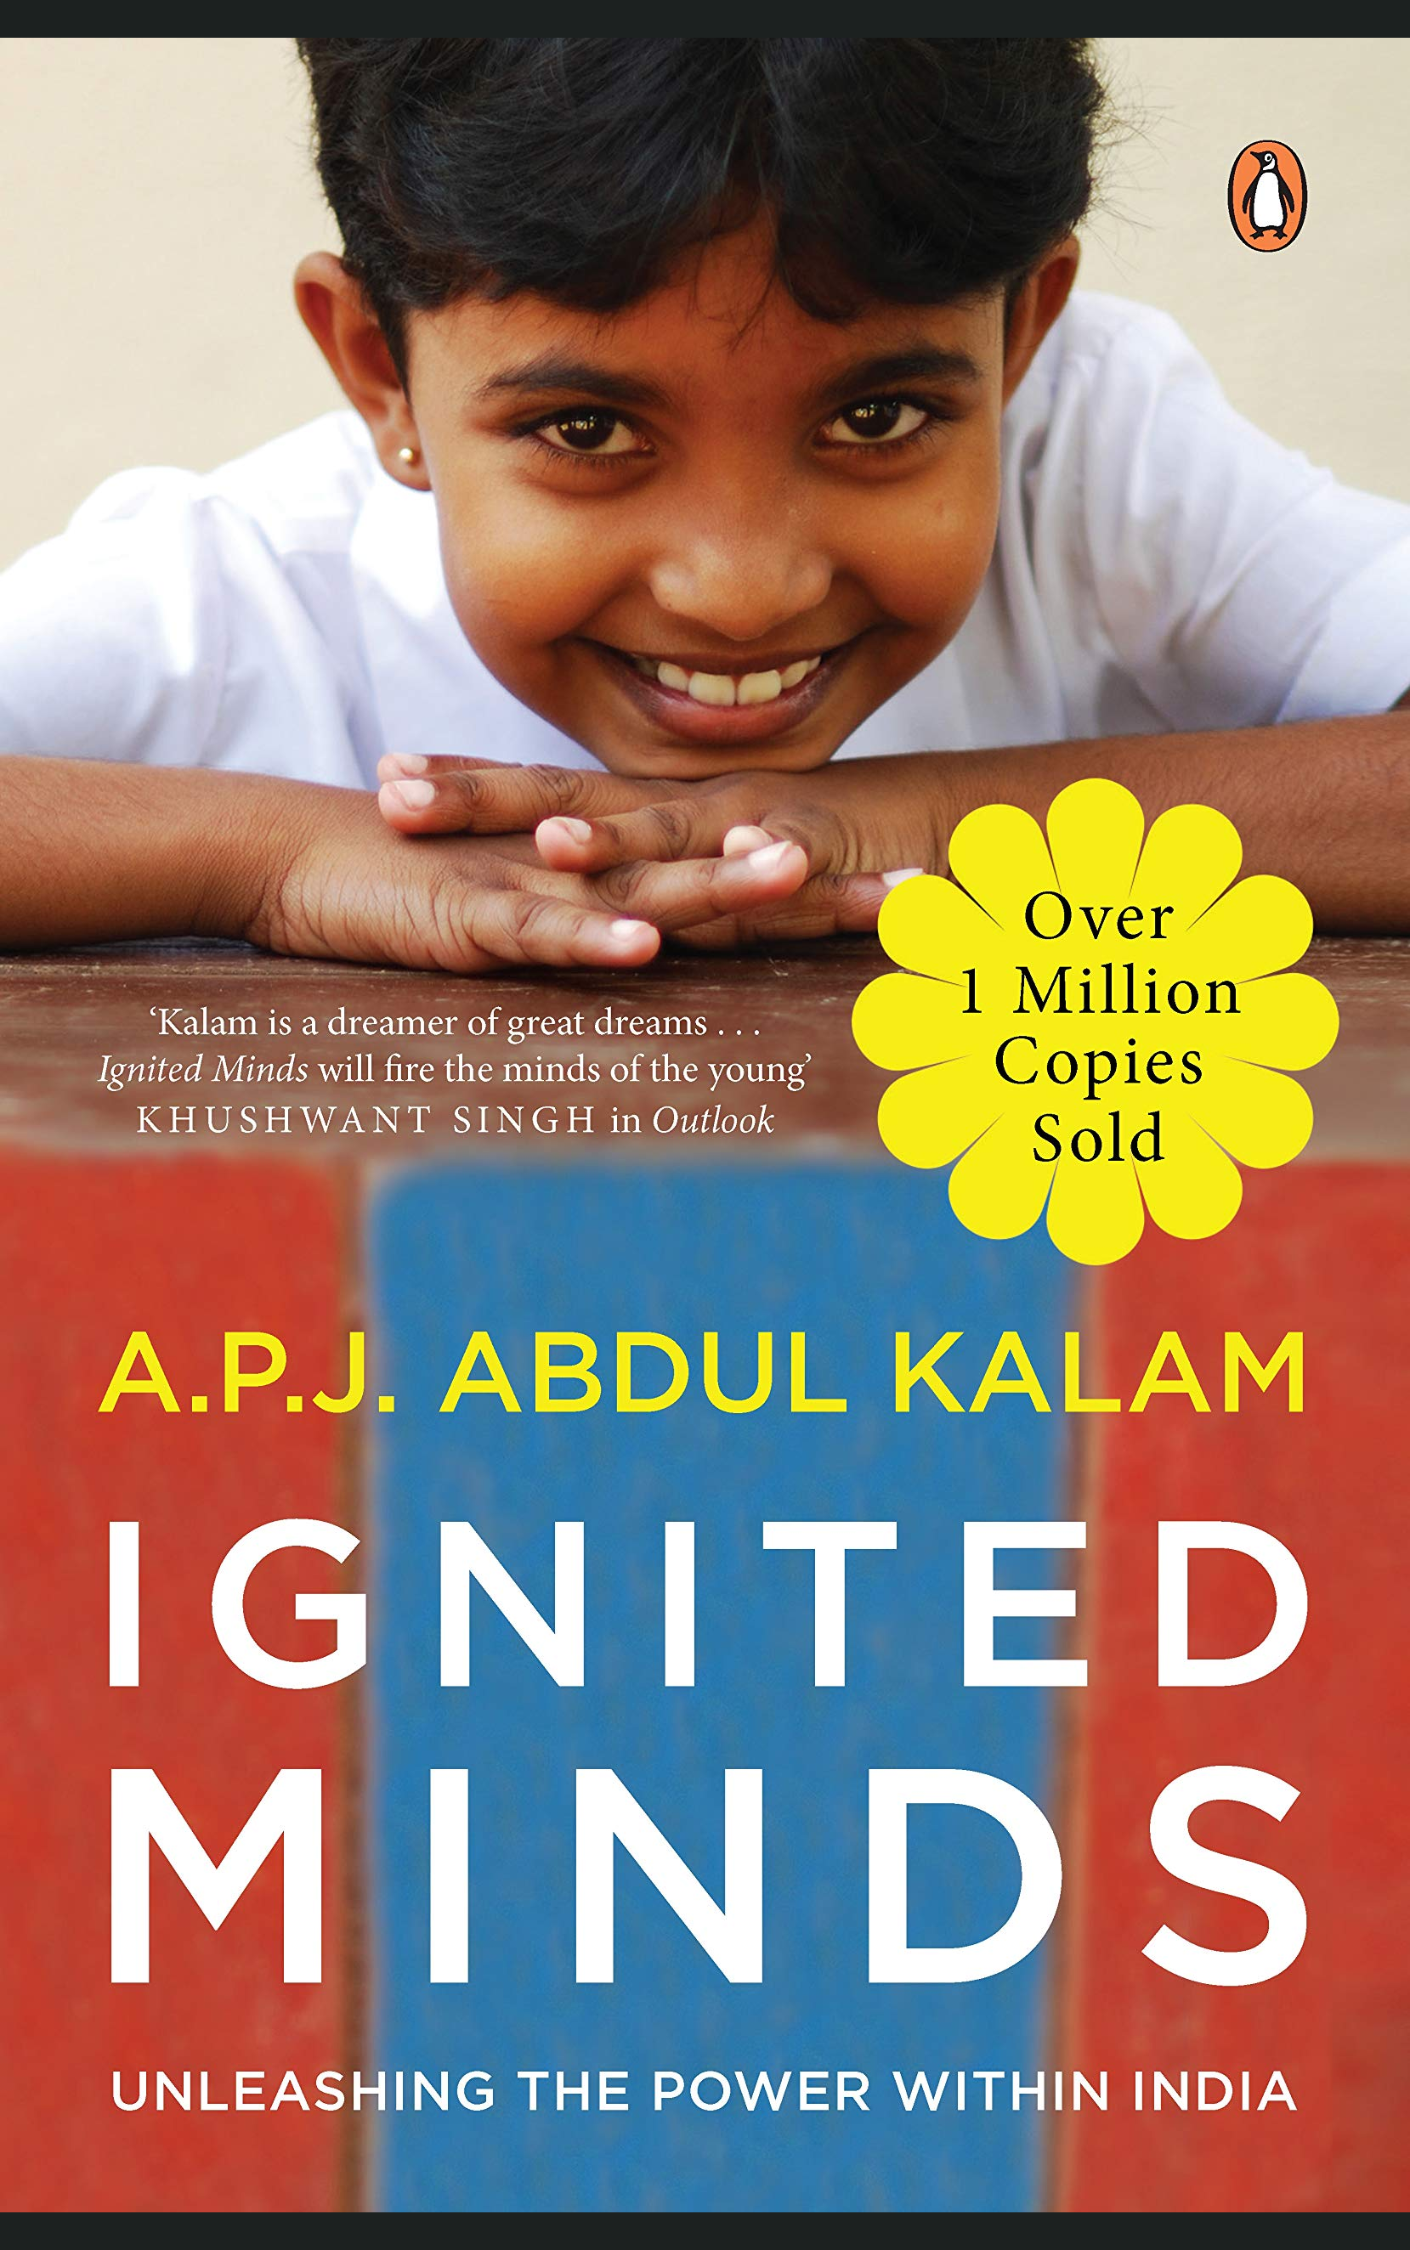 IGNITED MINDS by APJ ABDUL KALAM